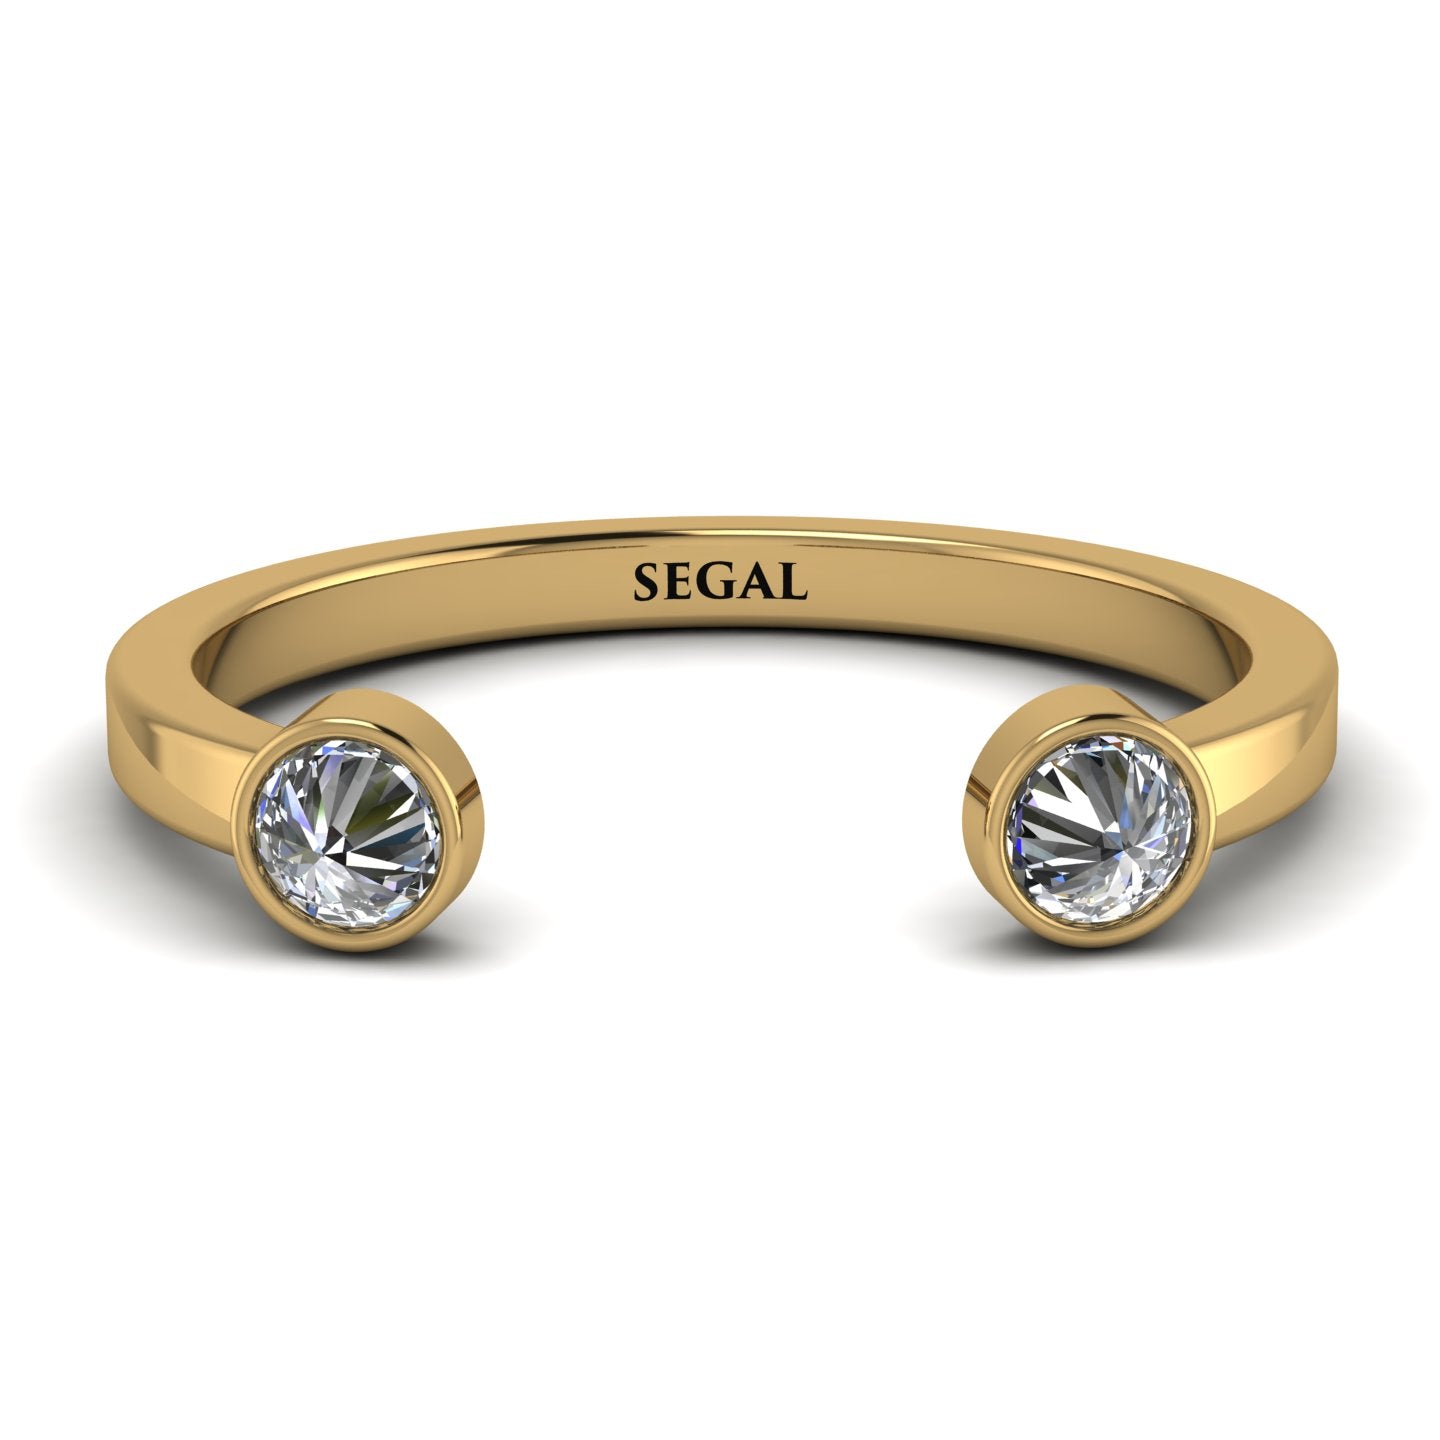 Upside Down Diamond Open Diamond Ring - Melody No. 1 14K Yellow Gold / Lab Created Diamond / 0.2ct / 3mm | Segal Jewelry